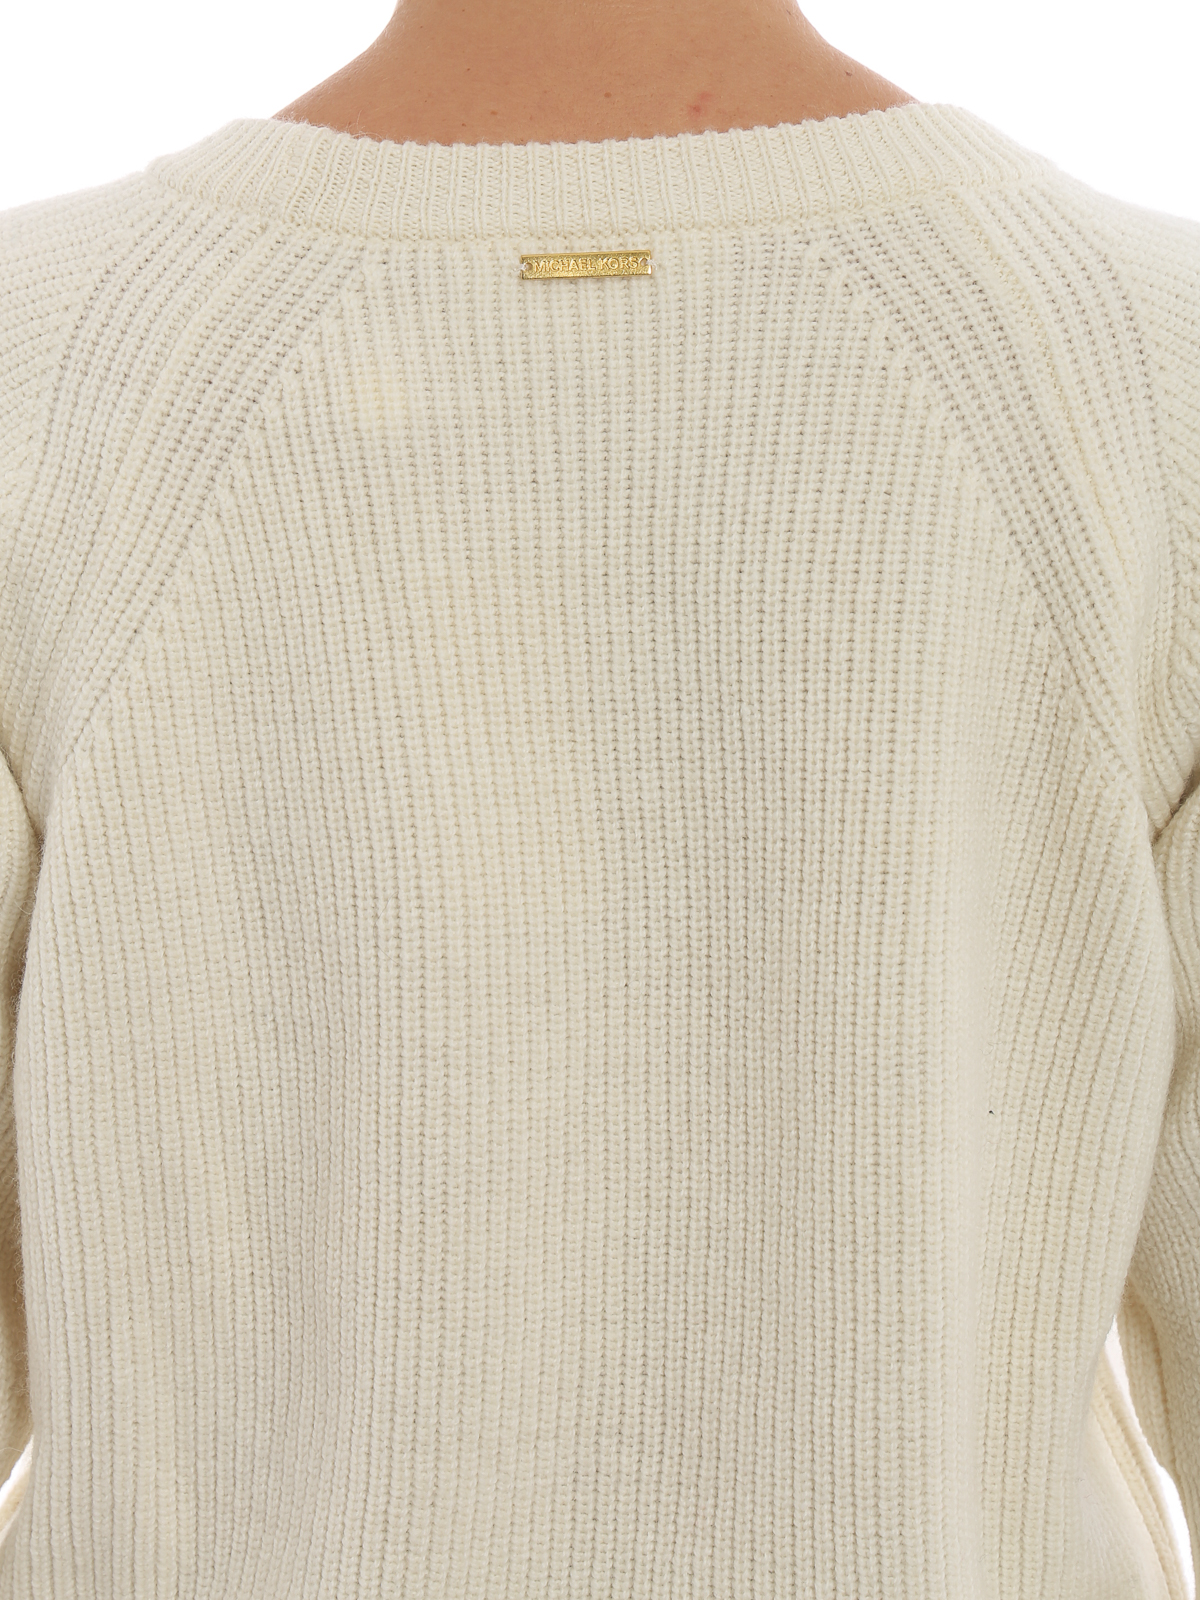 michael kors sweater